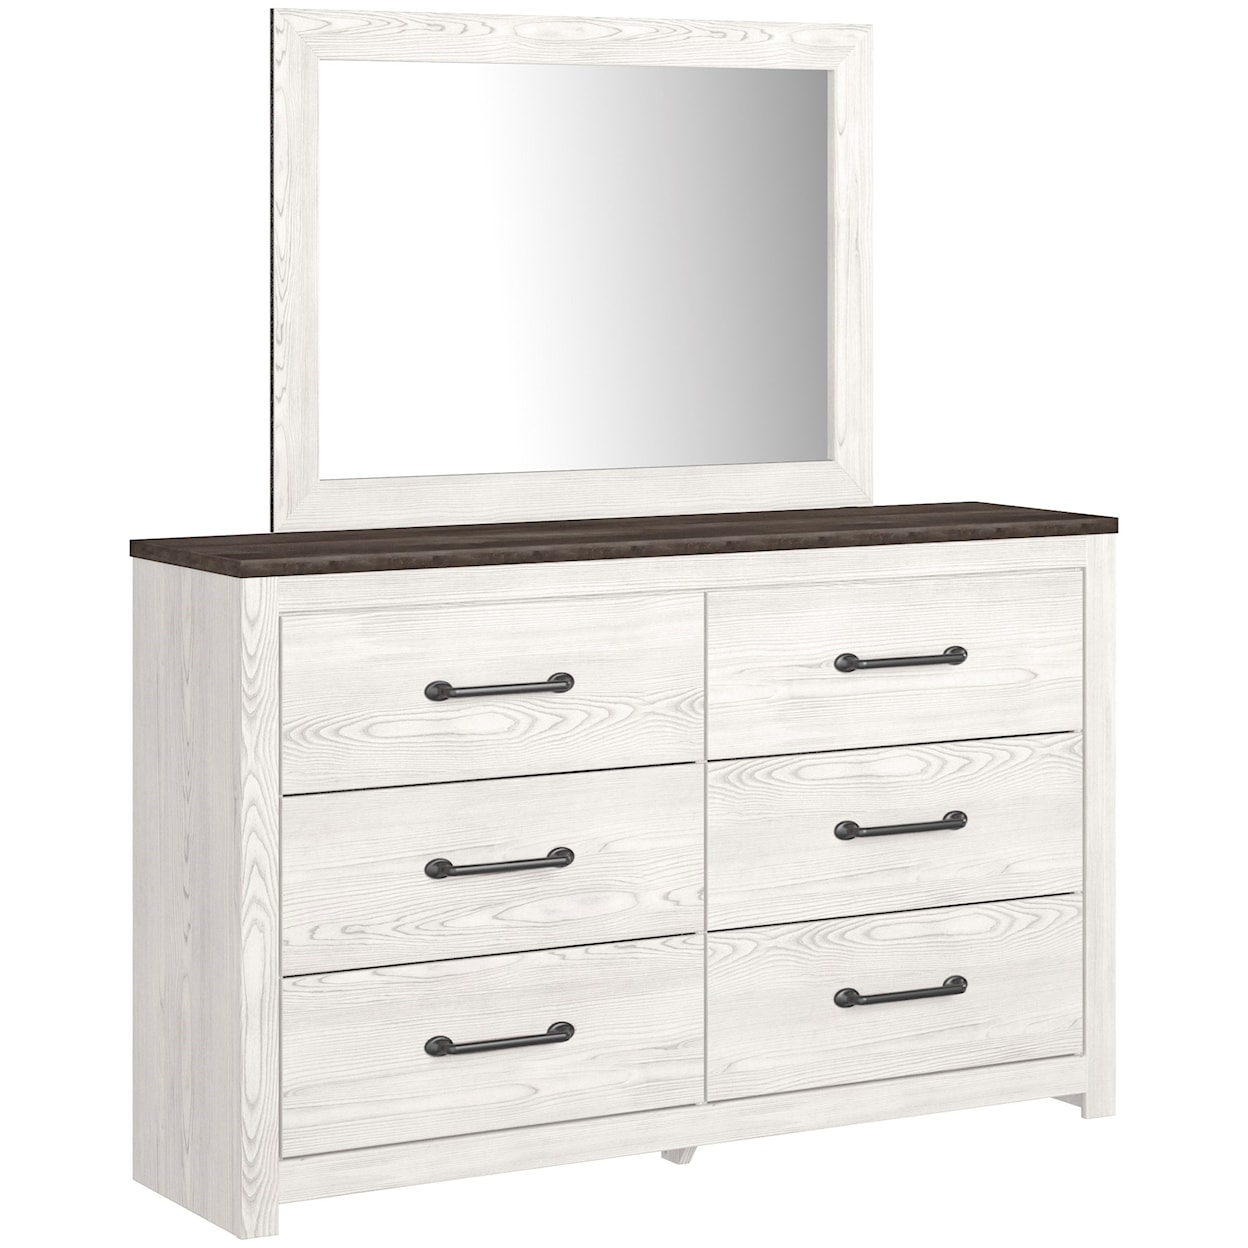 Ashley Furniture Signature Design Gerridan Bedroom Mirror